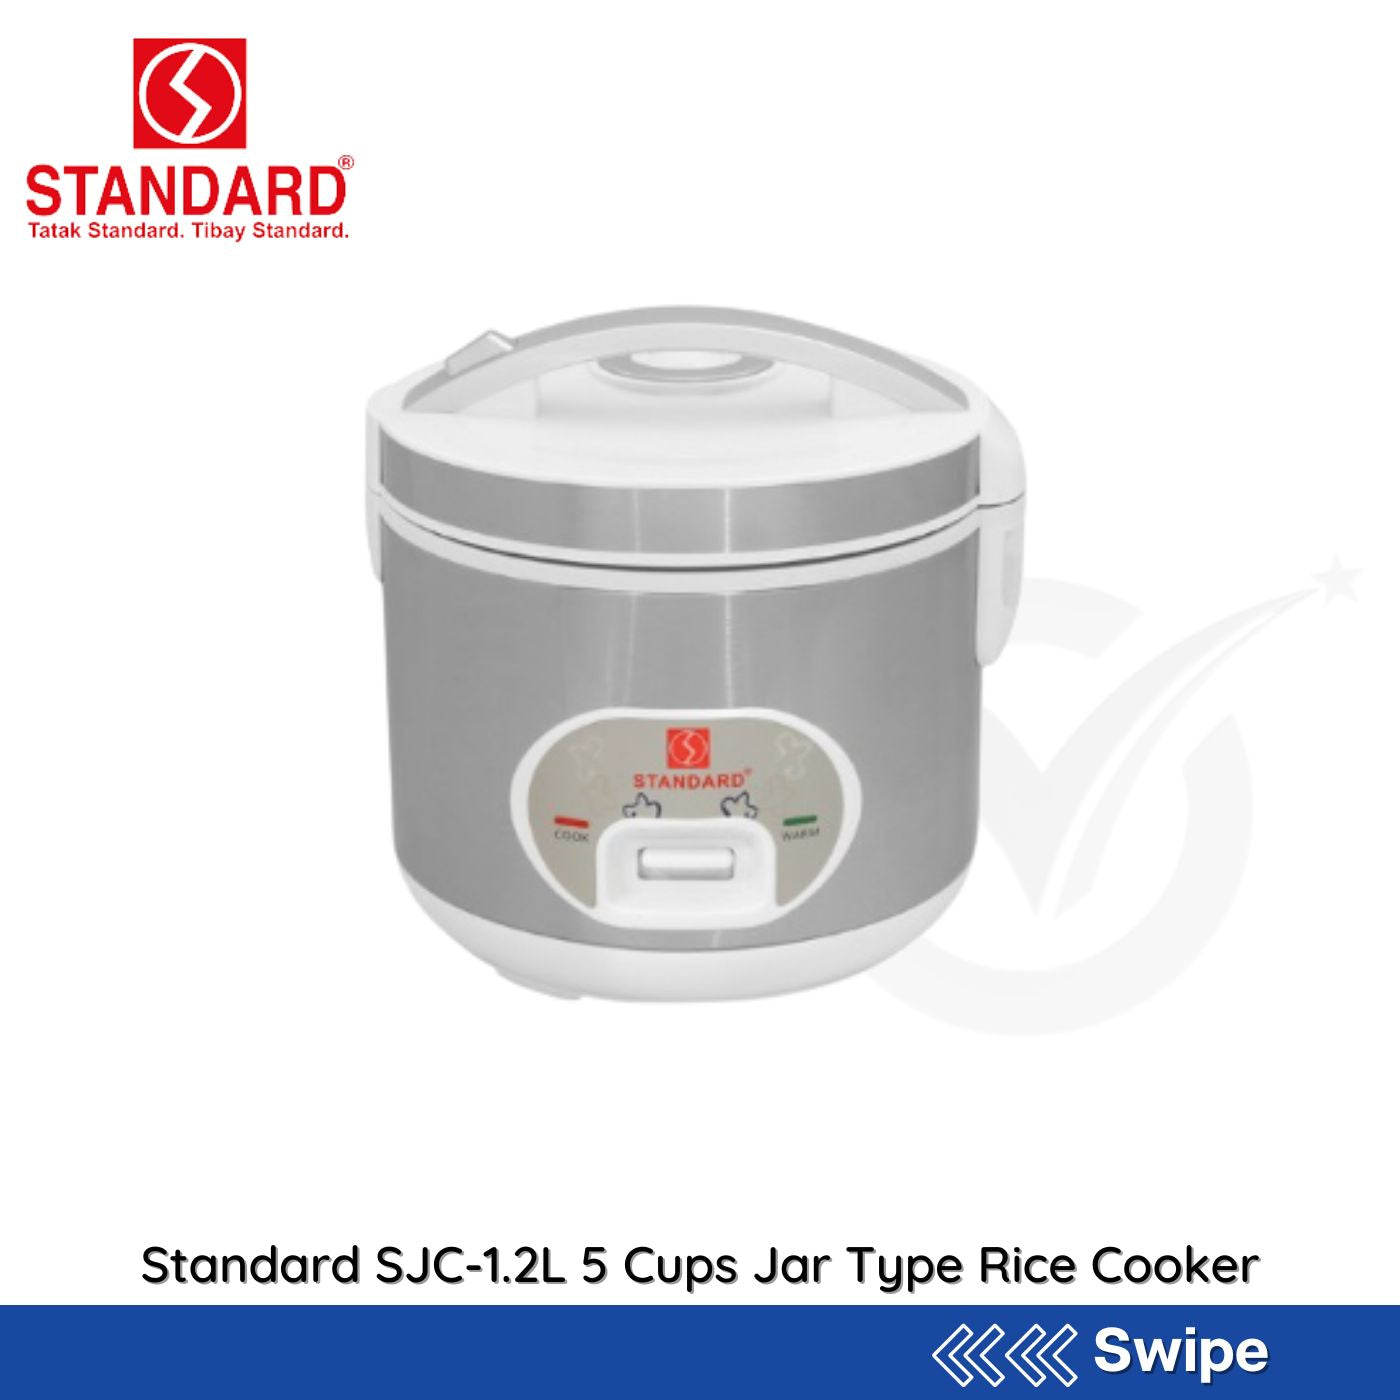 Standard SJC-1.2L 5 Cups Jar Type Rice Cooker